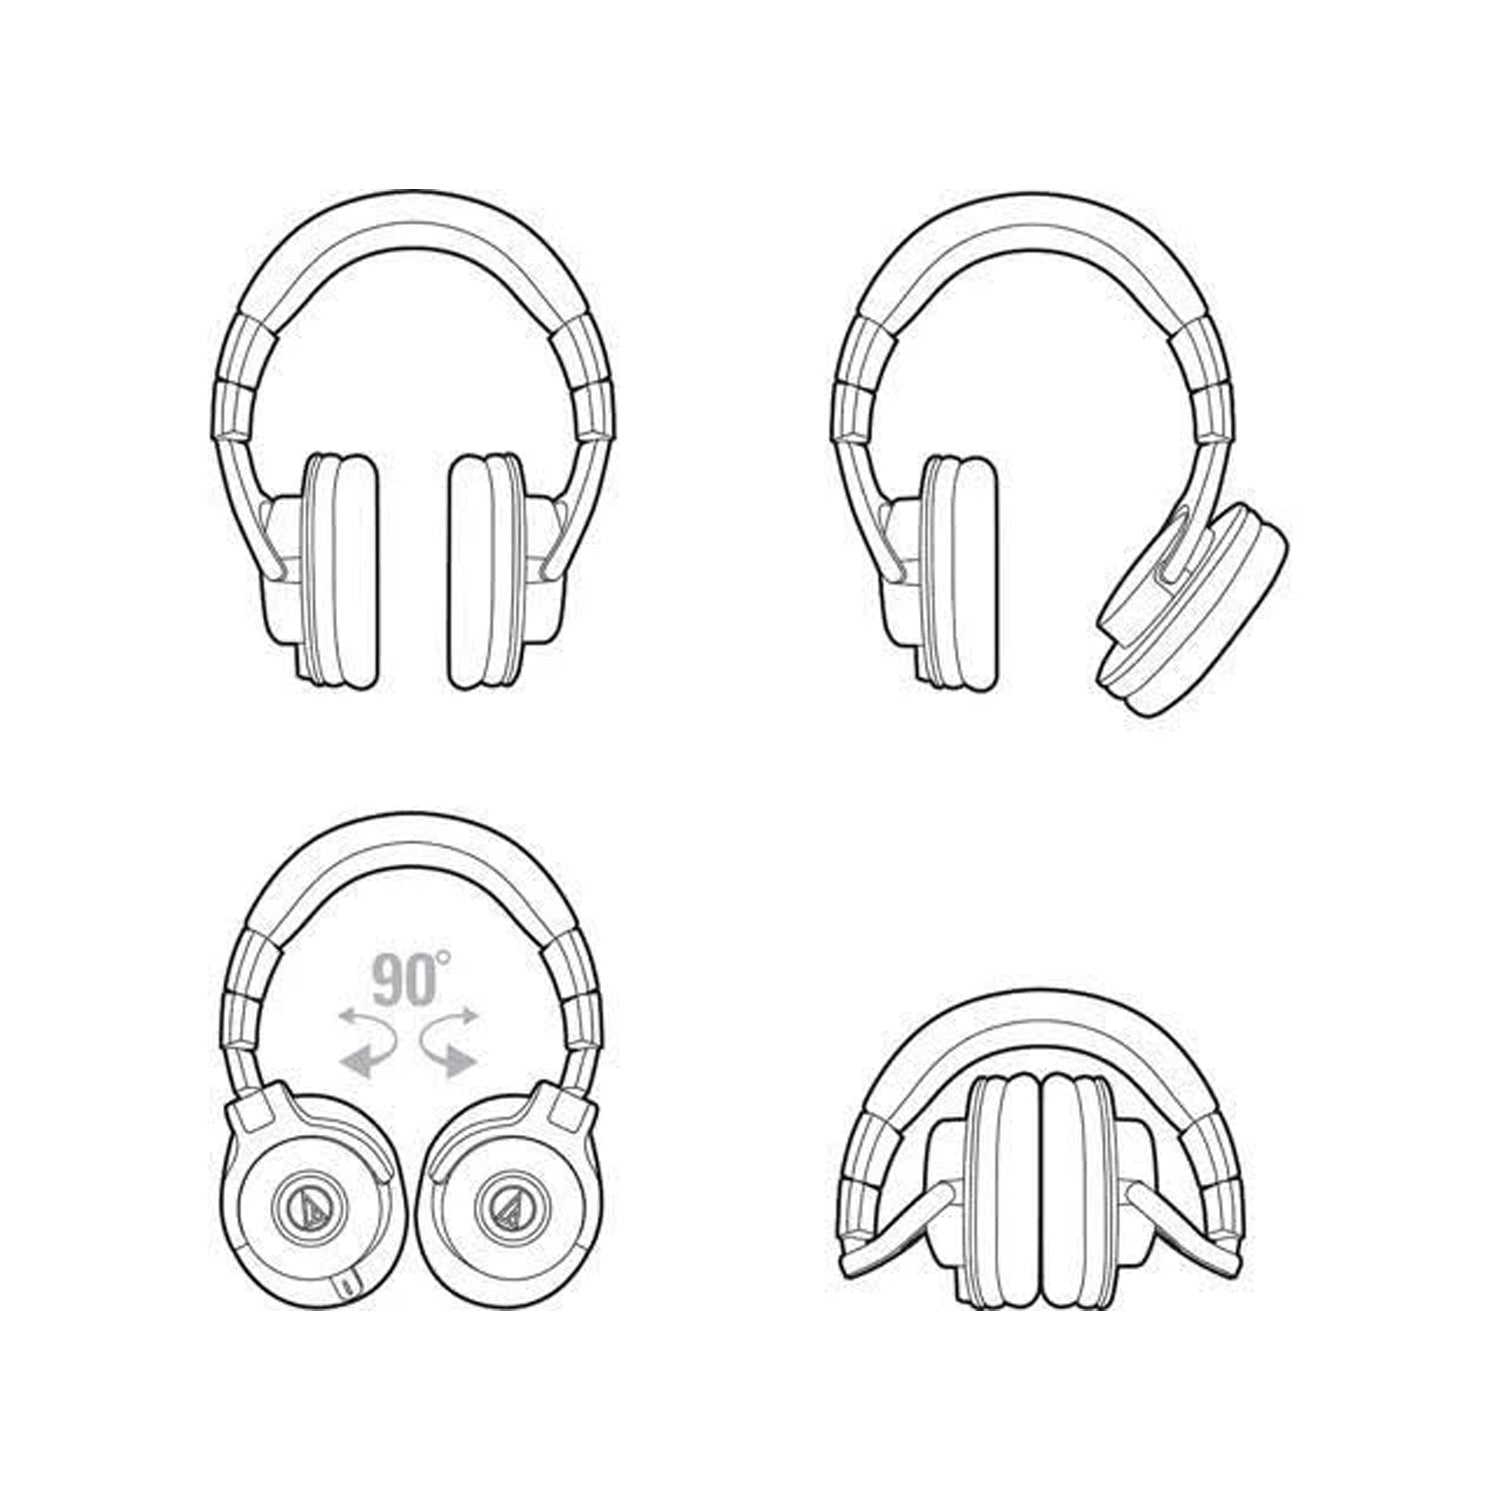 Audio-Technica ATH-M40x Professional Monitor Headphones